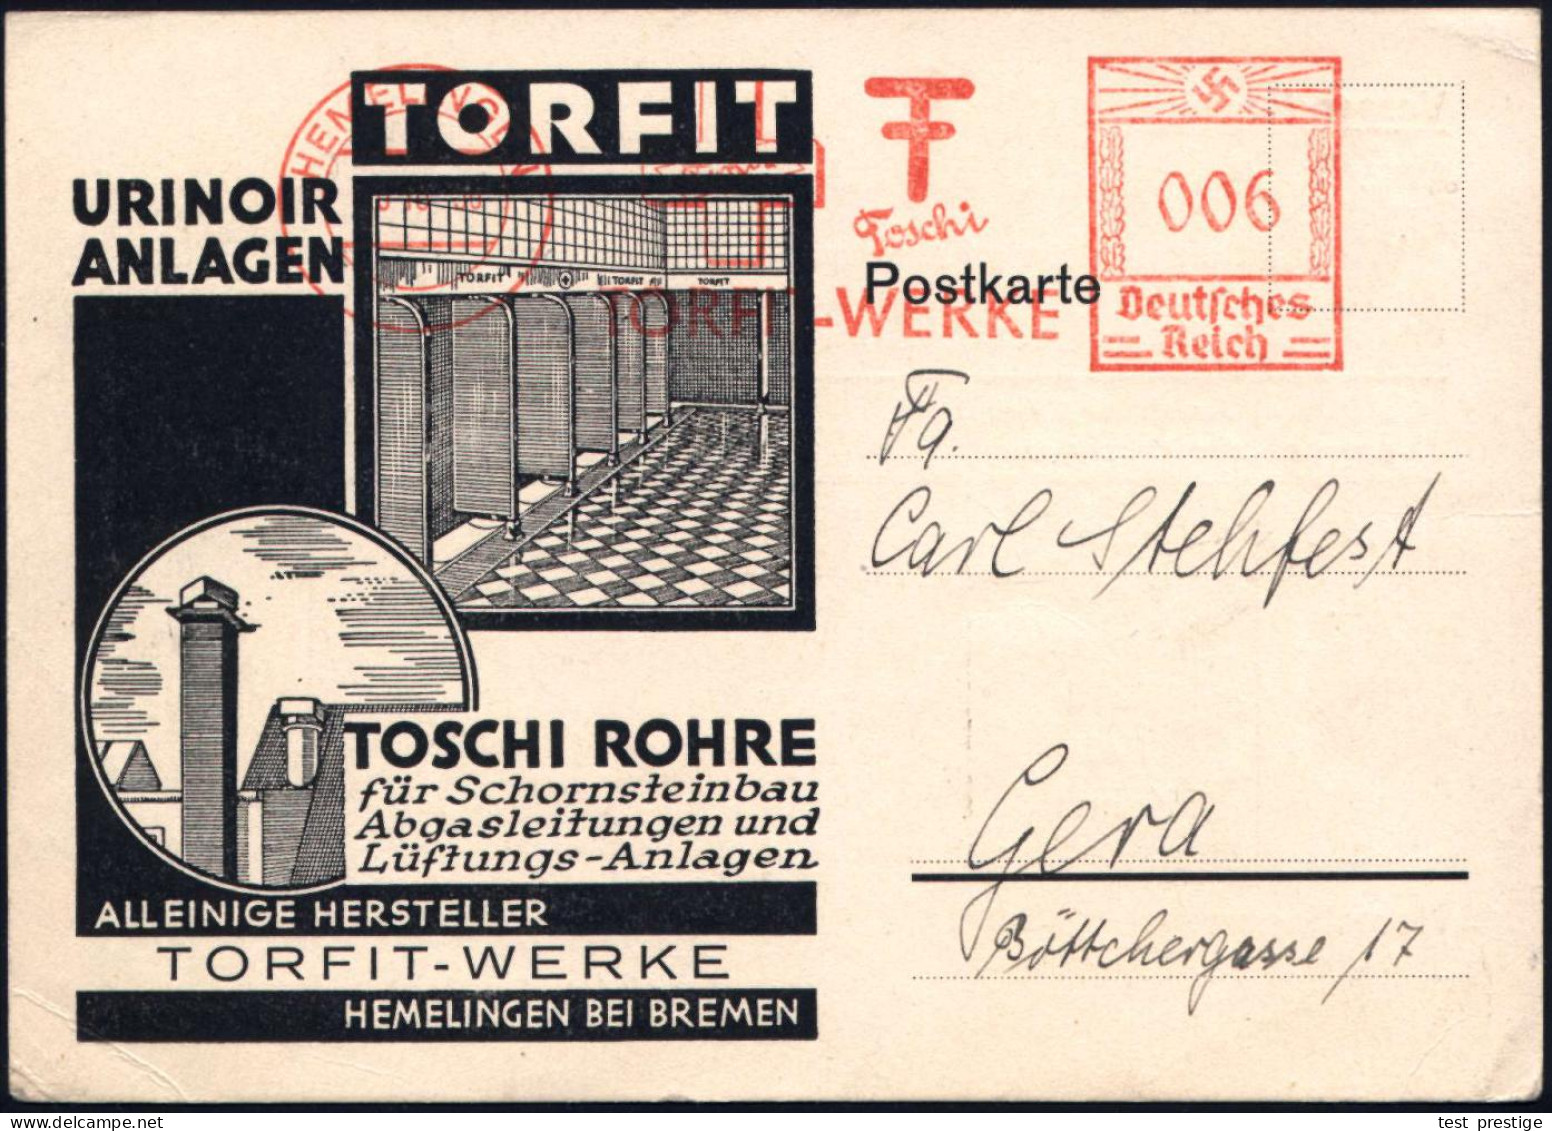 HEMELINGEN/ Toschi/ TORFIT-WERKE 1936 (16.10.) AFS Francotyp (Monogr.) Dekorative Reklame-Kt.: Urinoir, Schornstein-Abga - Sapeurs-Pompiers